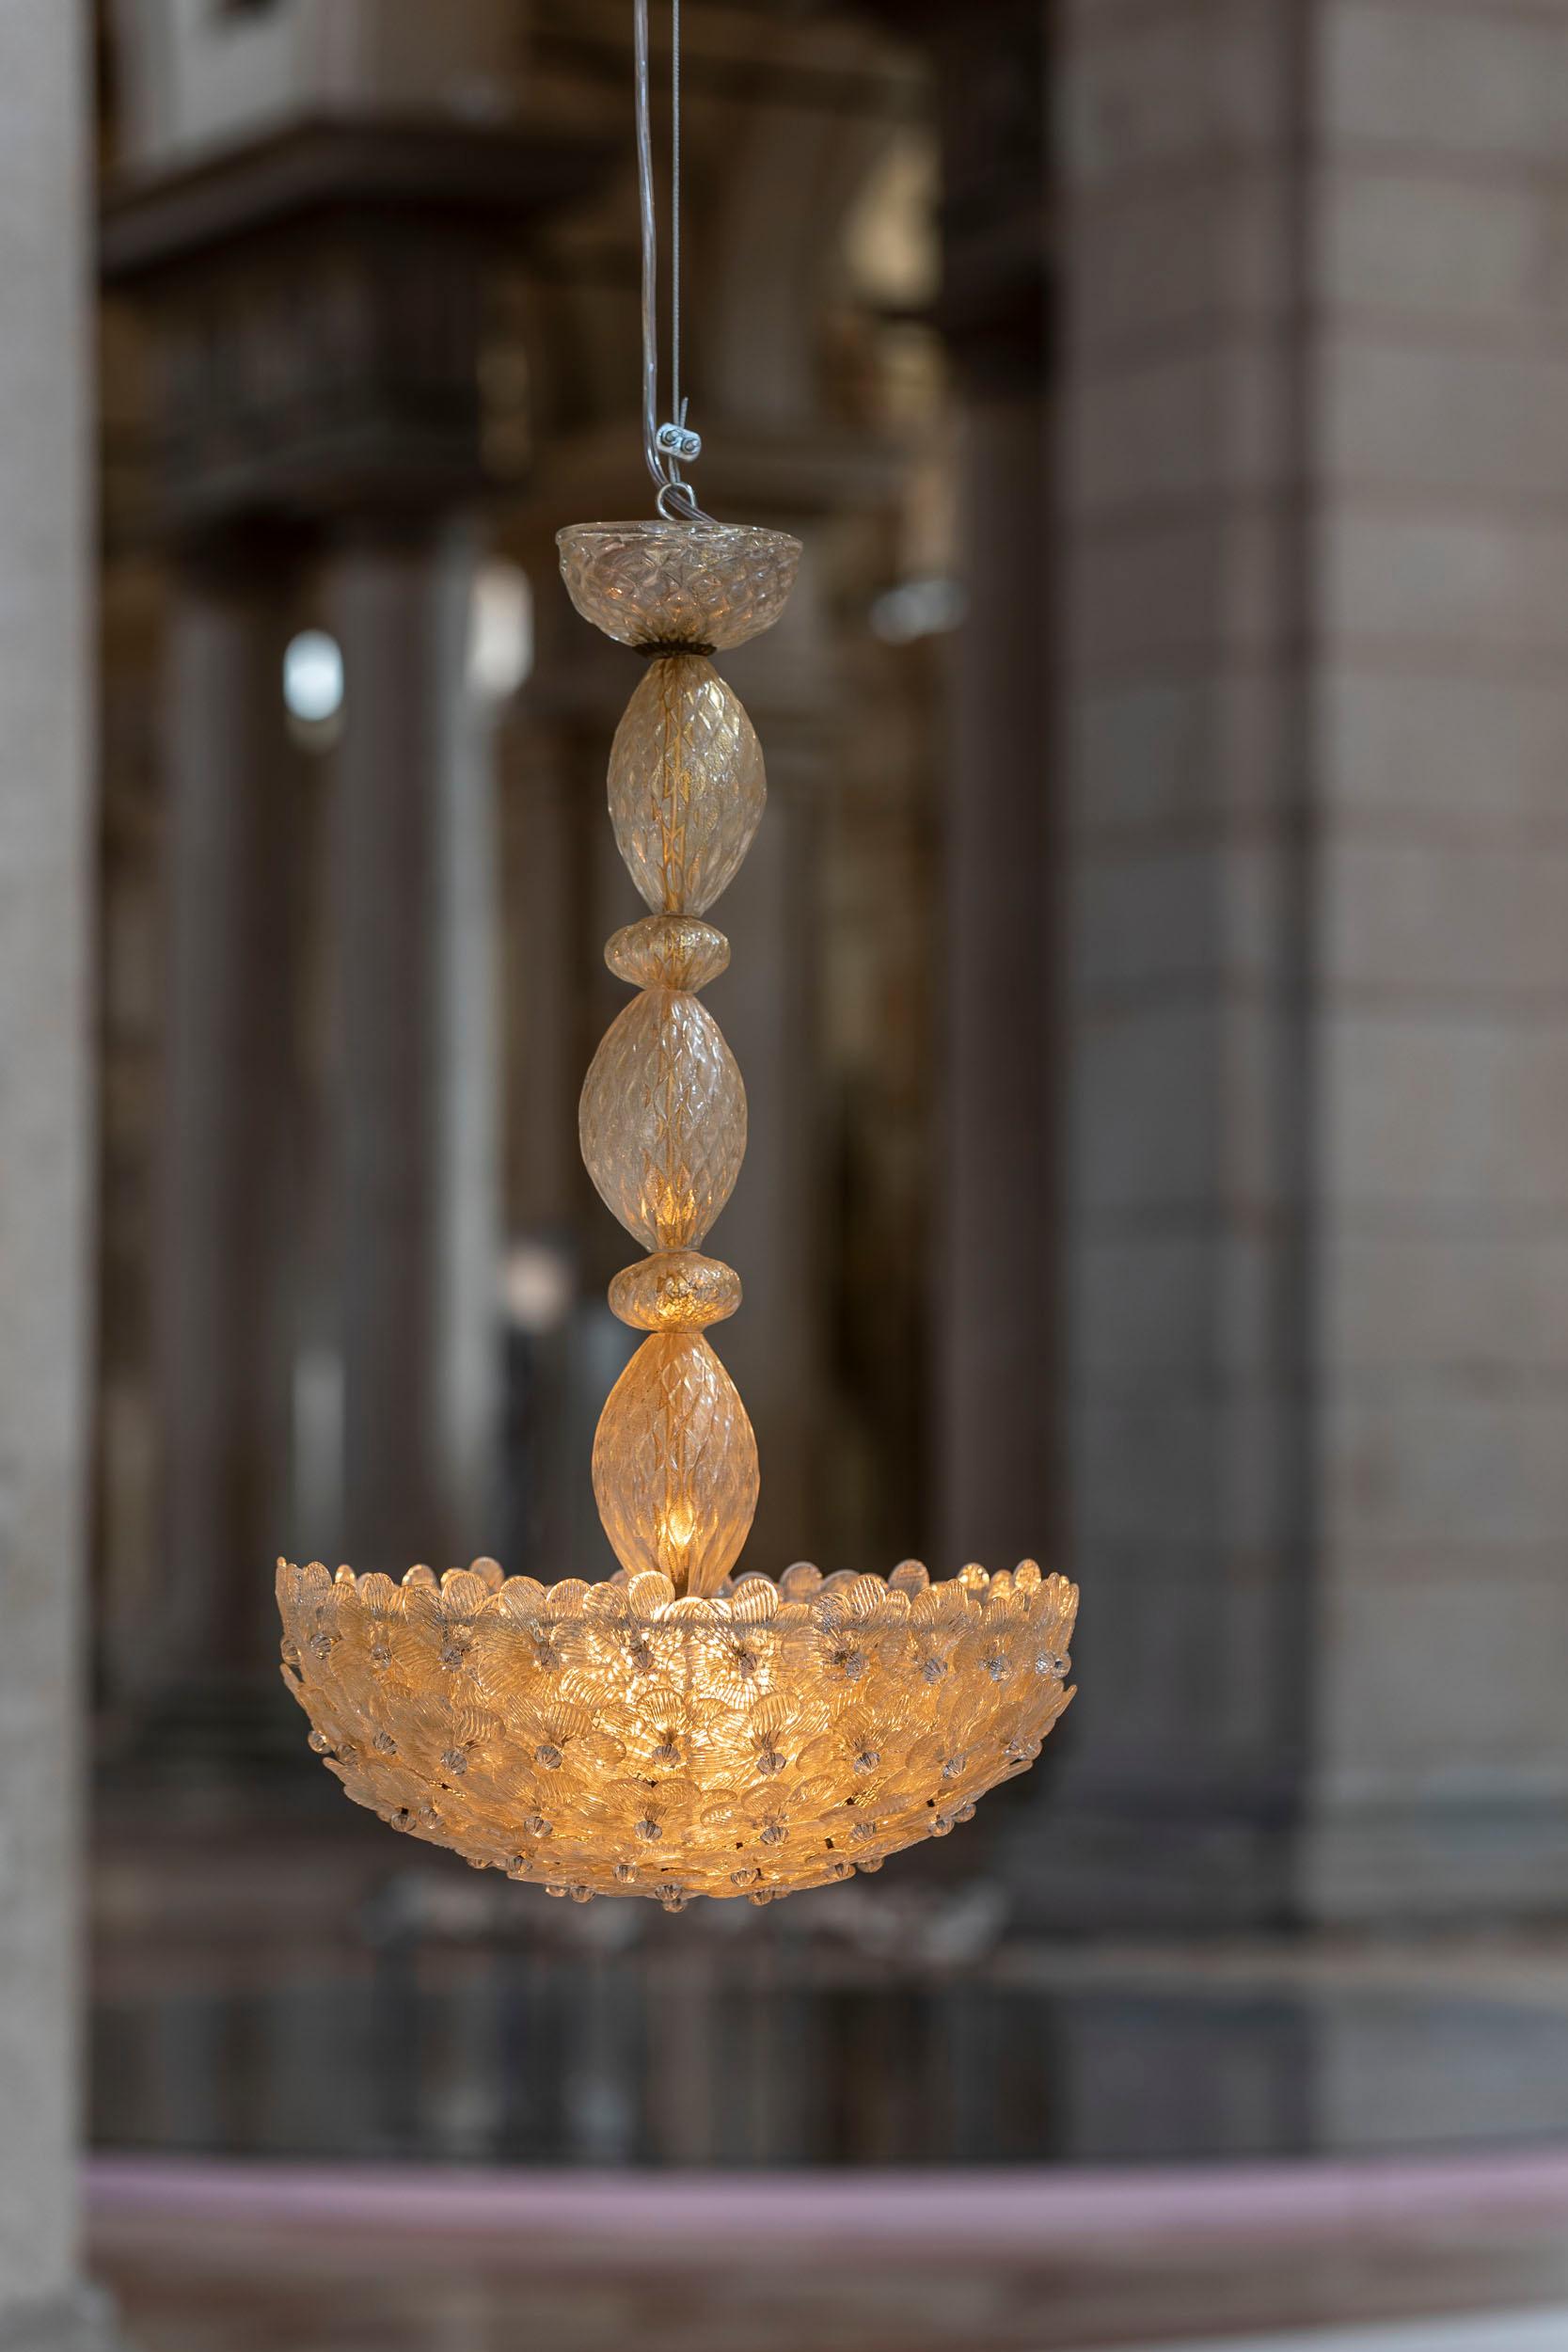 Pair of elegant Barovier Millefiori pendants with typical goldish flowers in Murano hand blown glass.